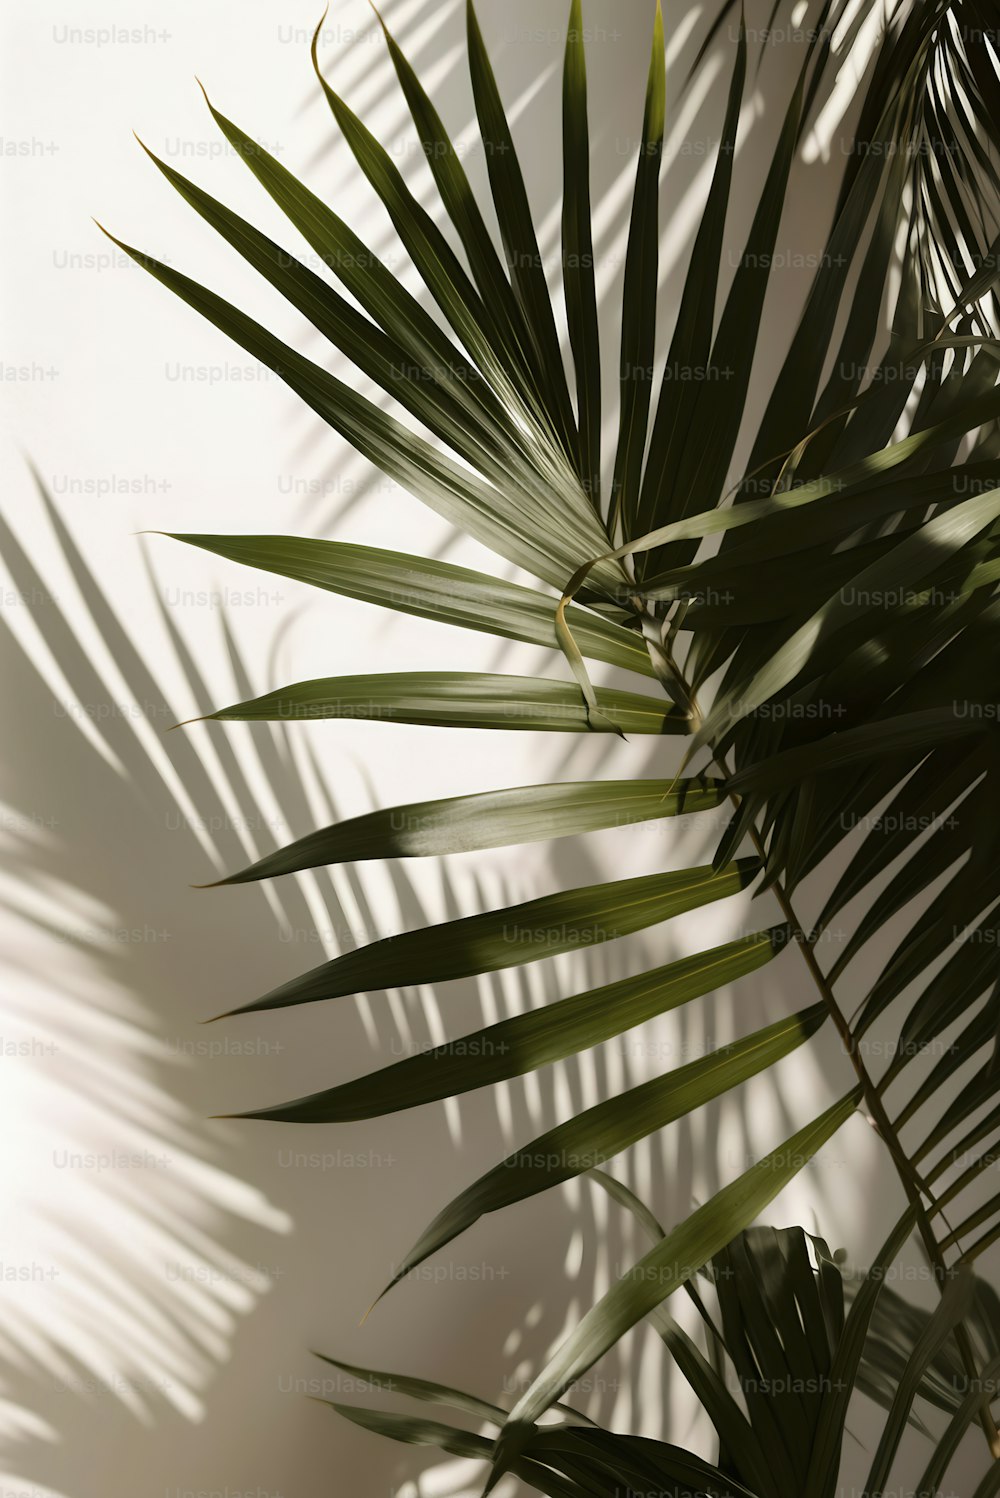 a palm leaf casts a shadow on a wall